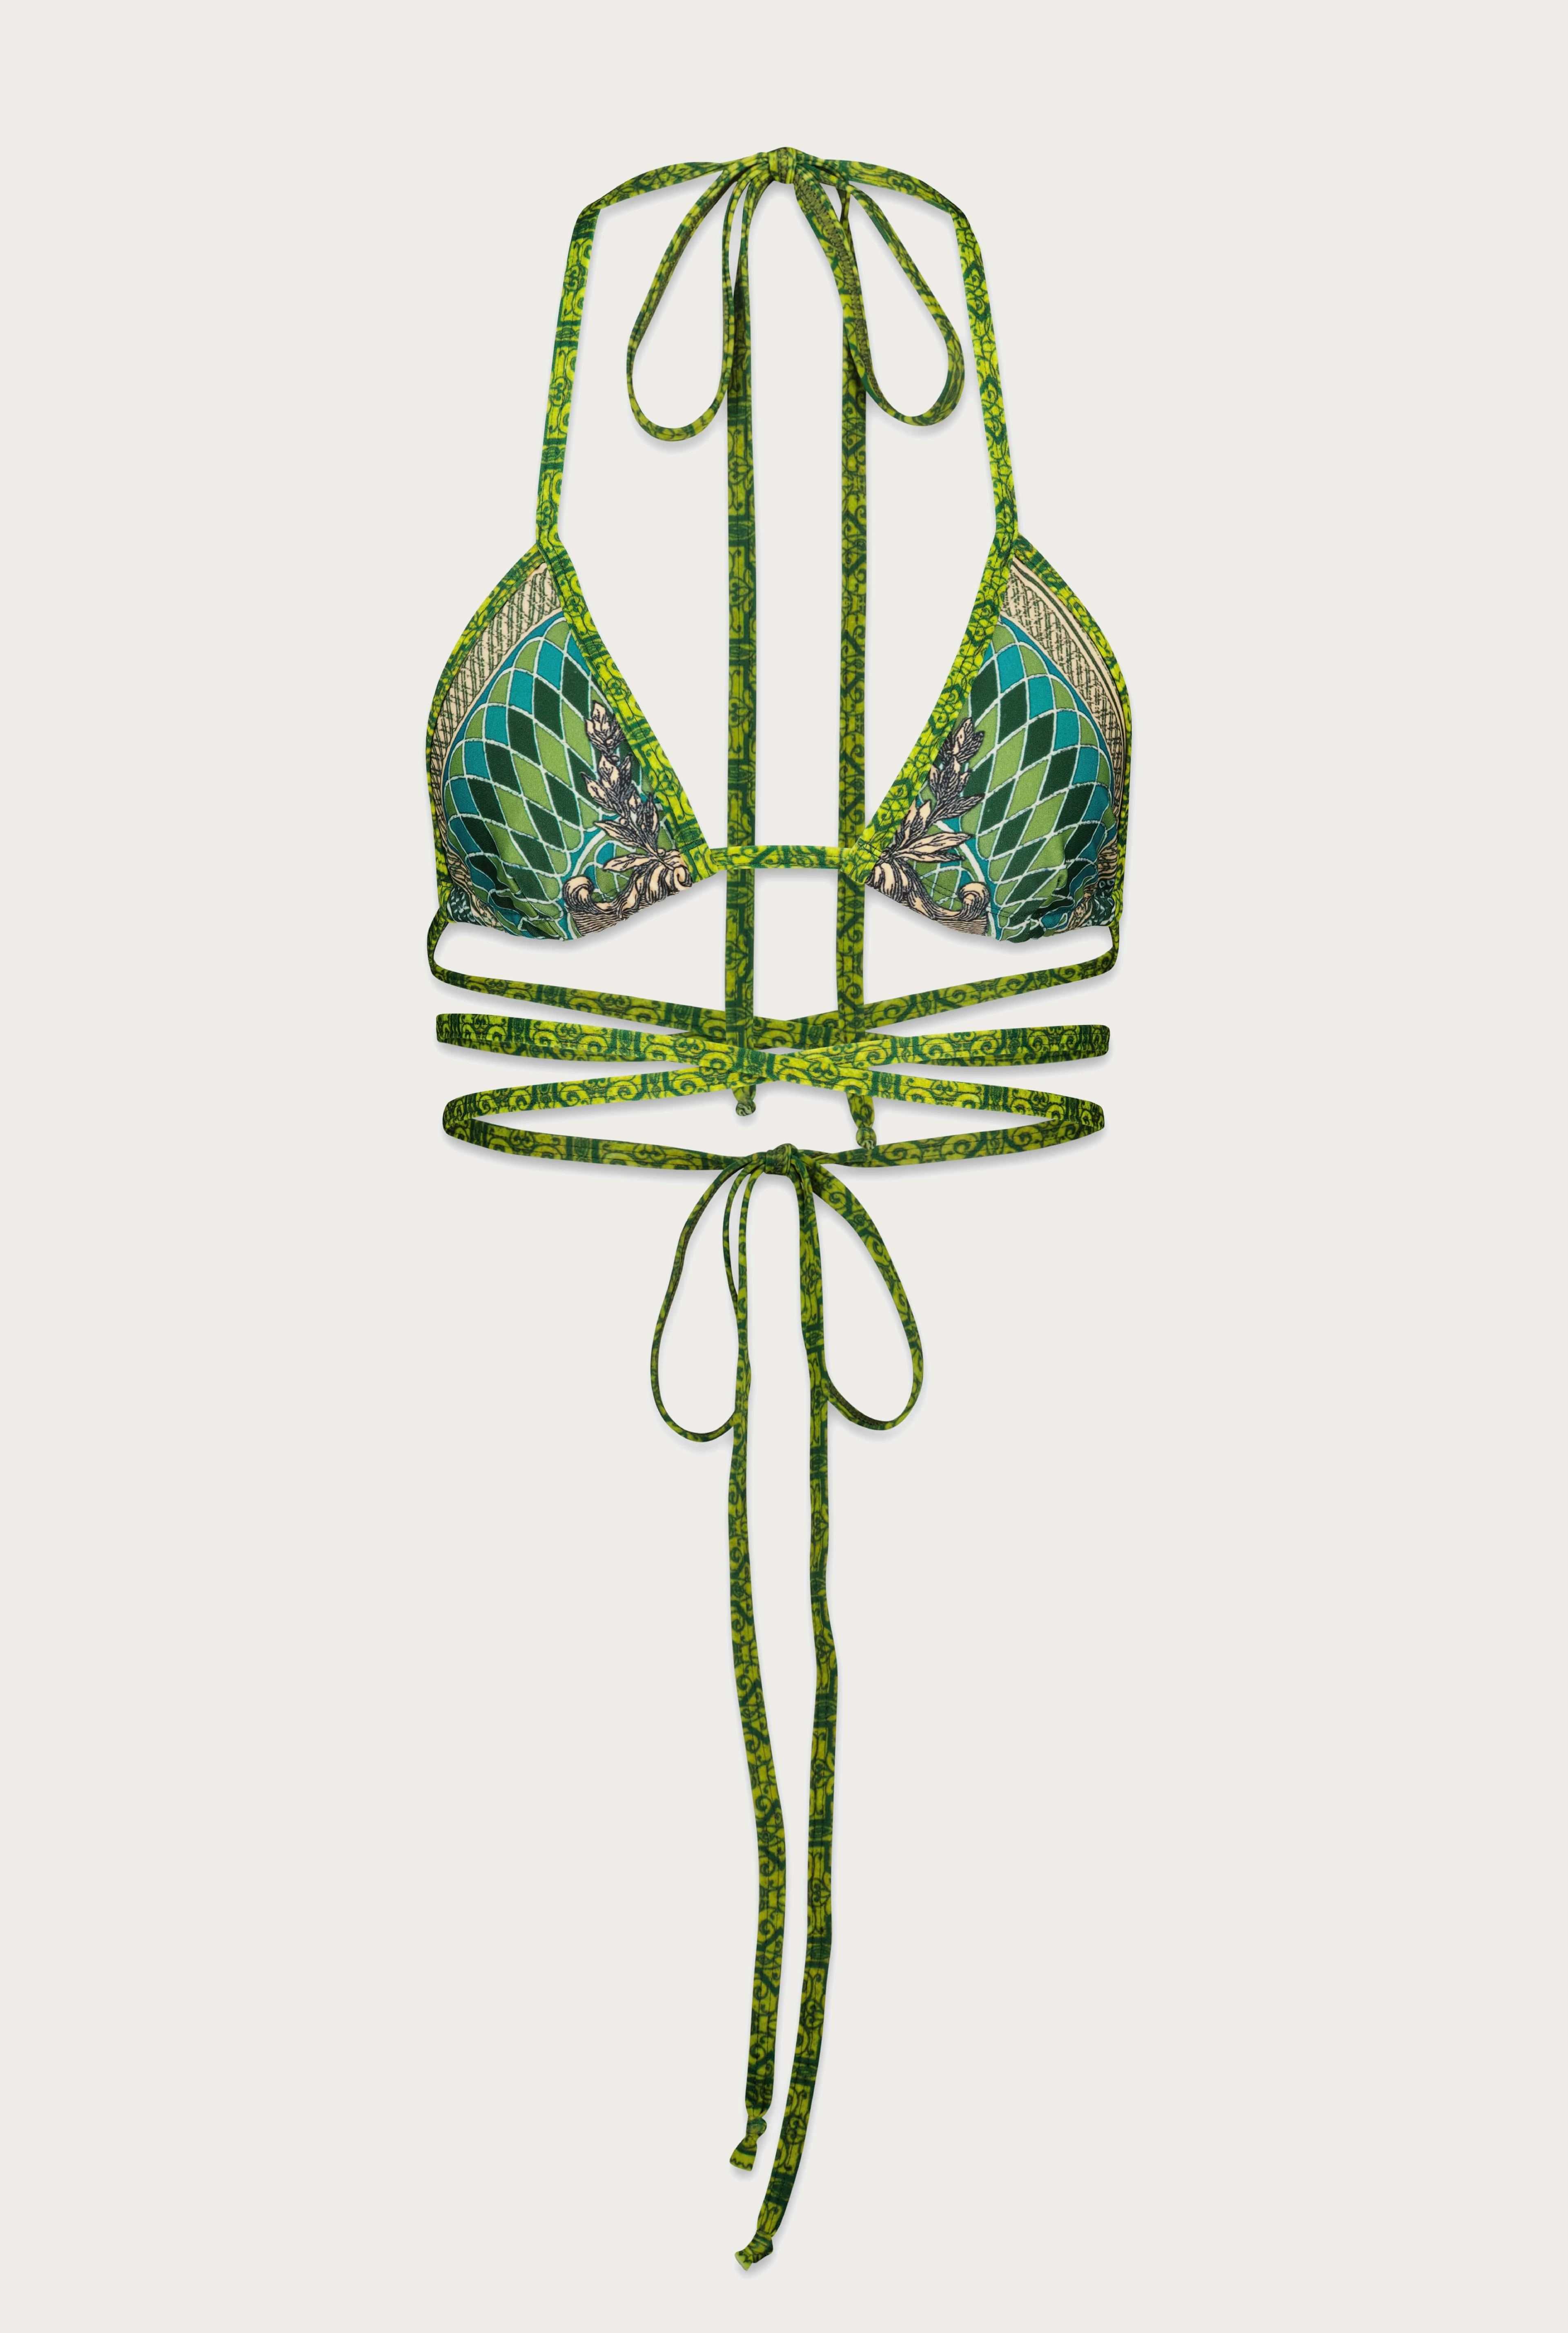 Le Haut de Bikini Billet de Banque Jean Paul Gaultier